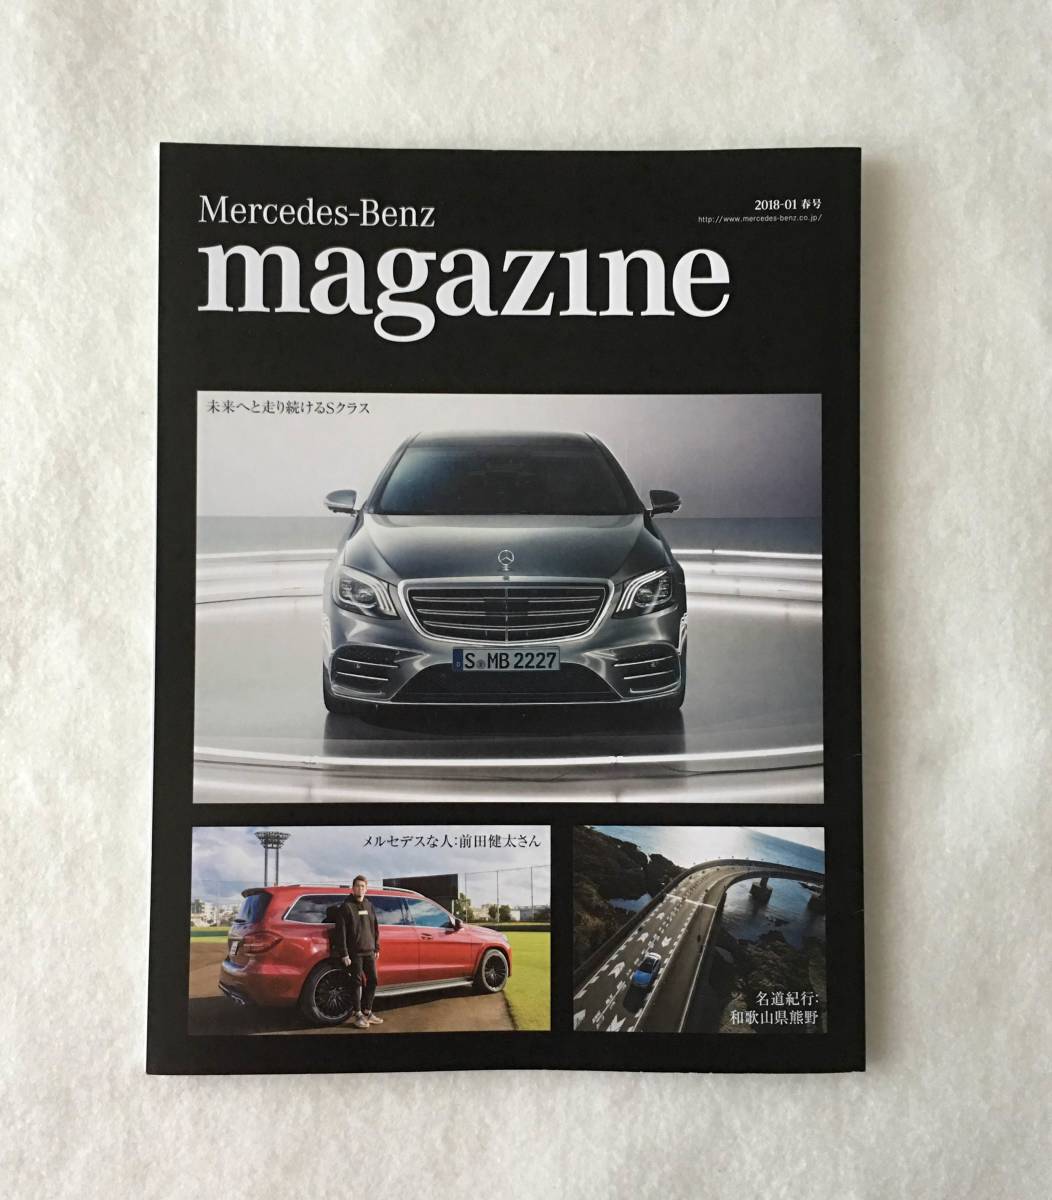 Mercedes-Benz Magazine 2018-01 Весенний выпуск ★ Kenta Maeda ★ Не продается журнал Mercedes-Benz